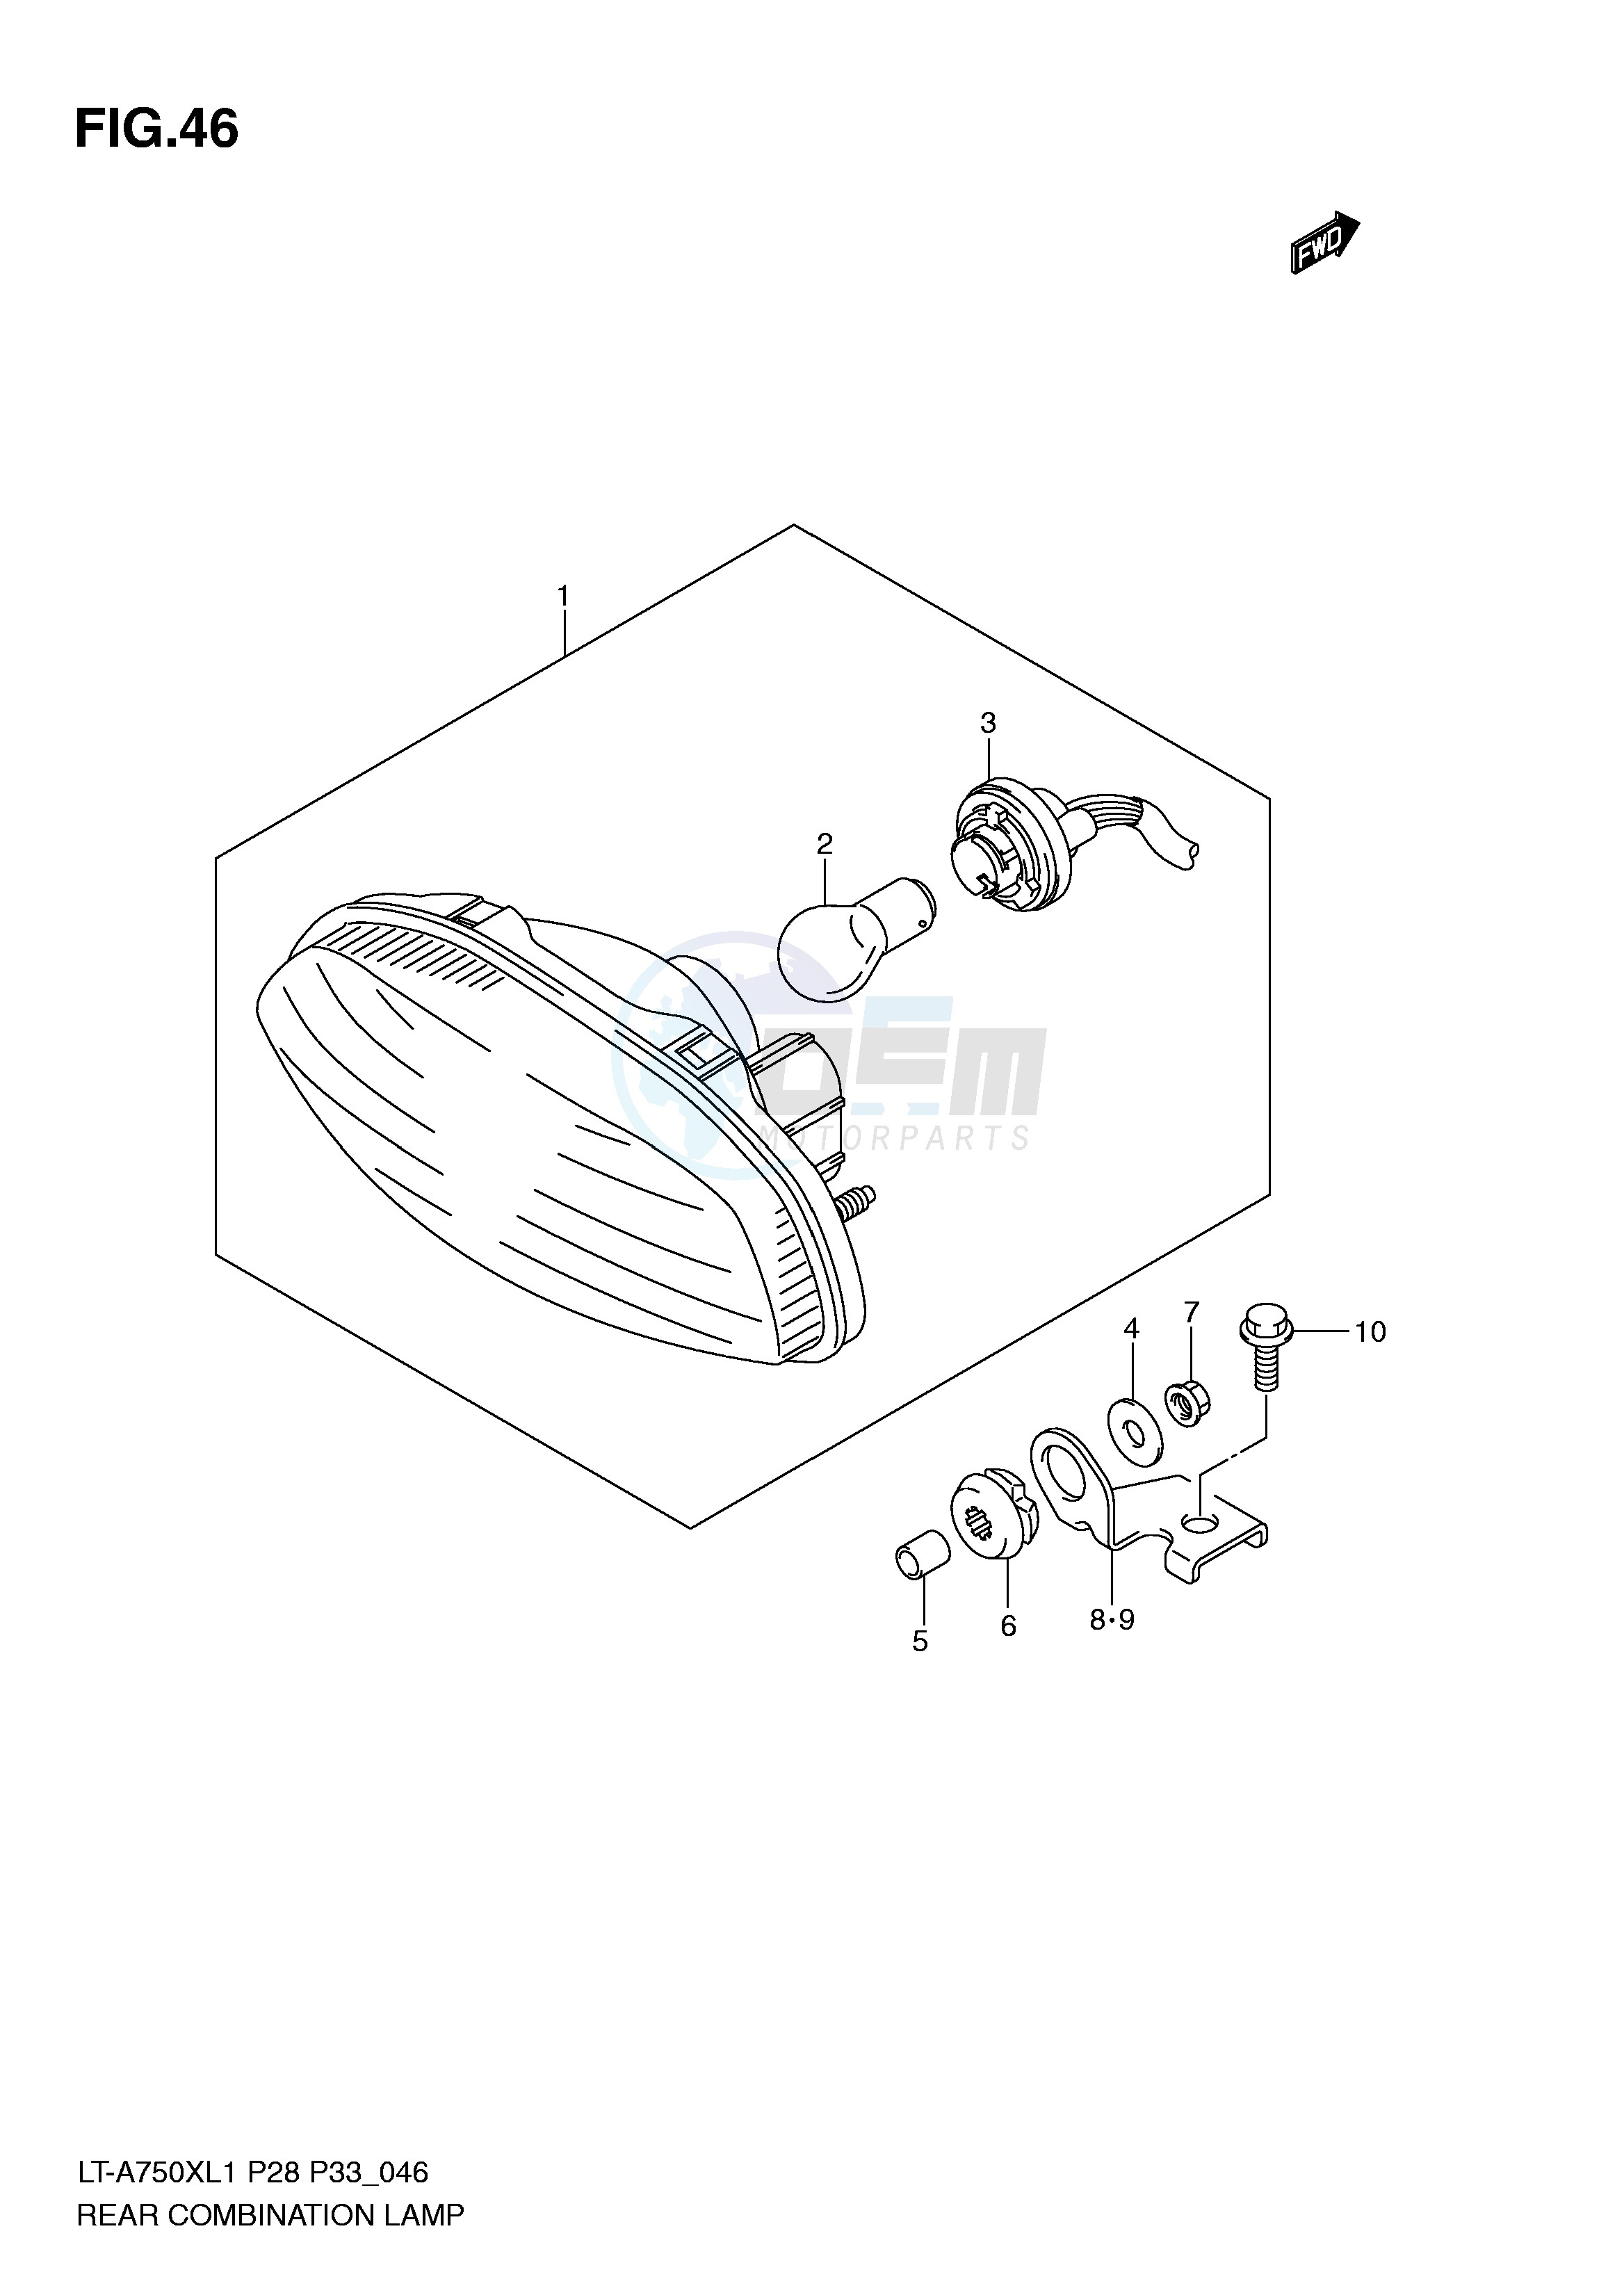 REAR COMBINATION LAMP (LT-A750XZL1 P33) image